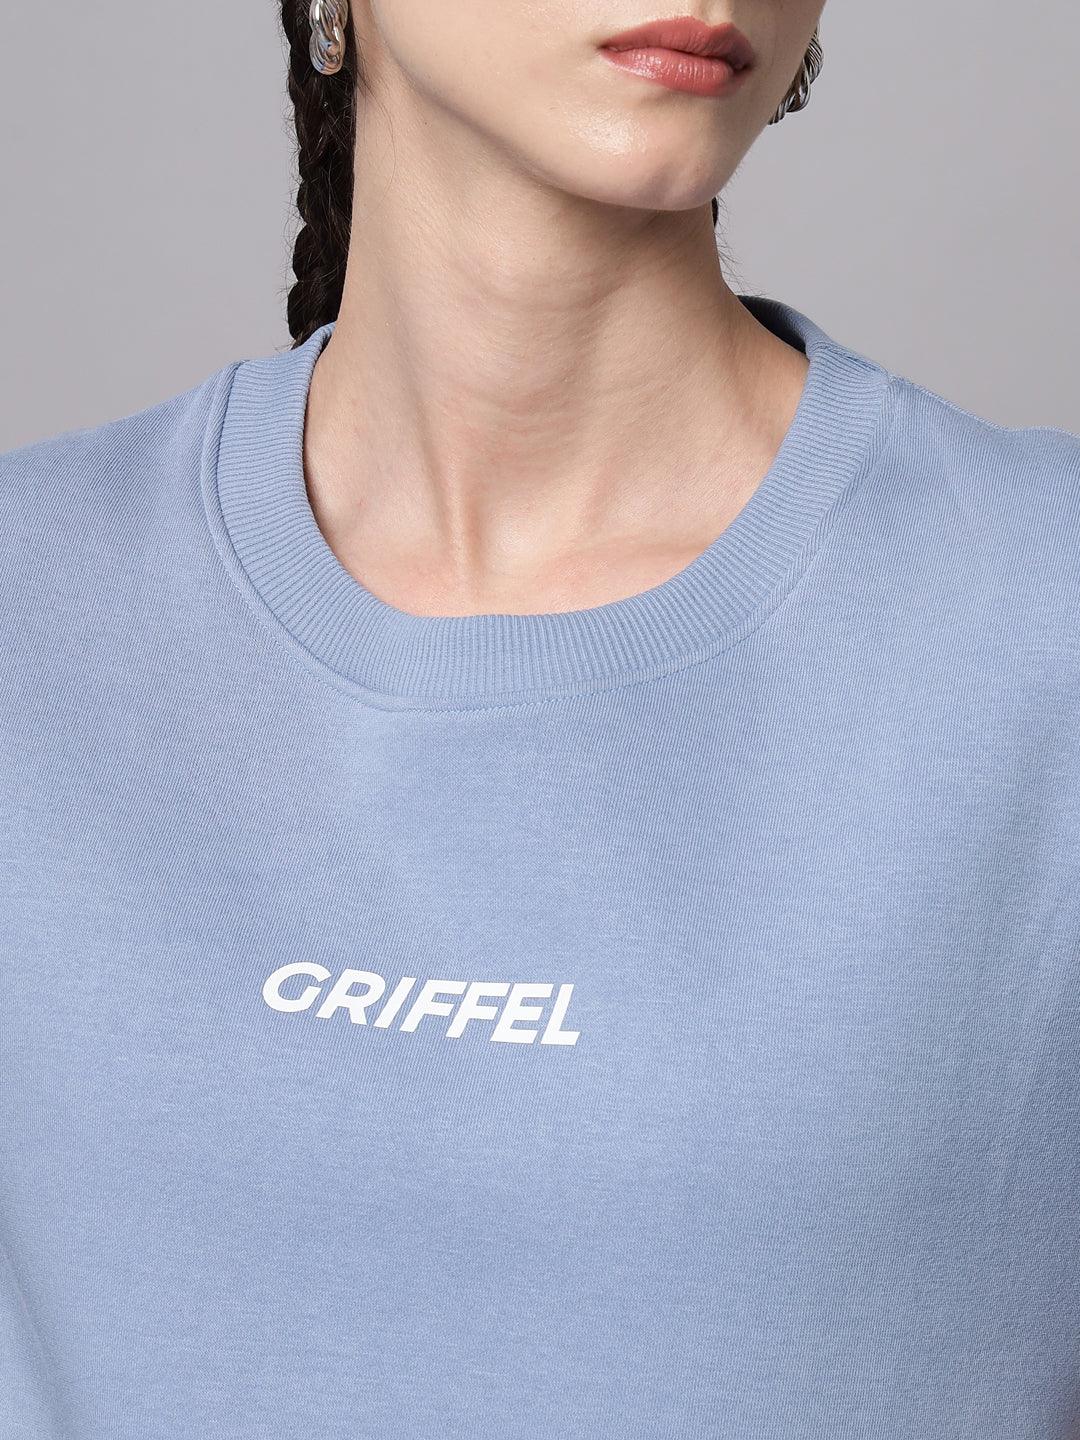 Griffel Women’s Printed Round Neck Sky Blue Cotton Fleece Full Sleeve Sweatshirt - griffel